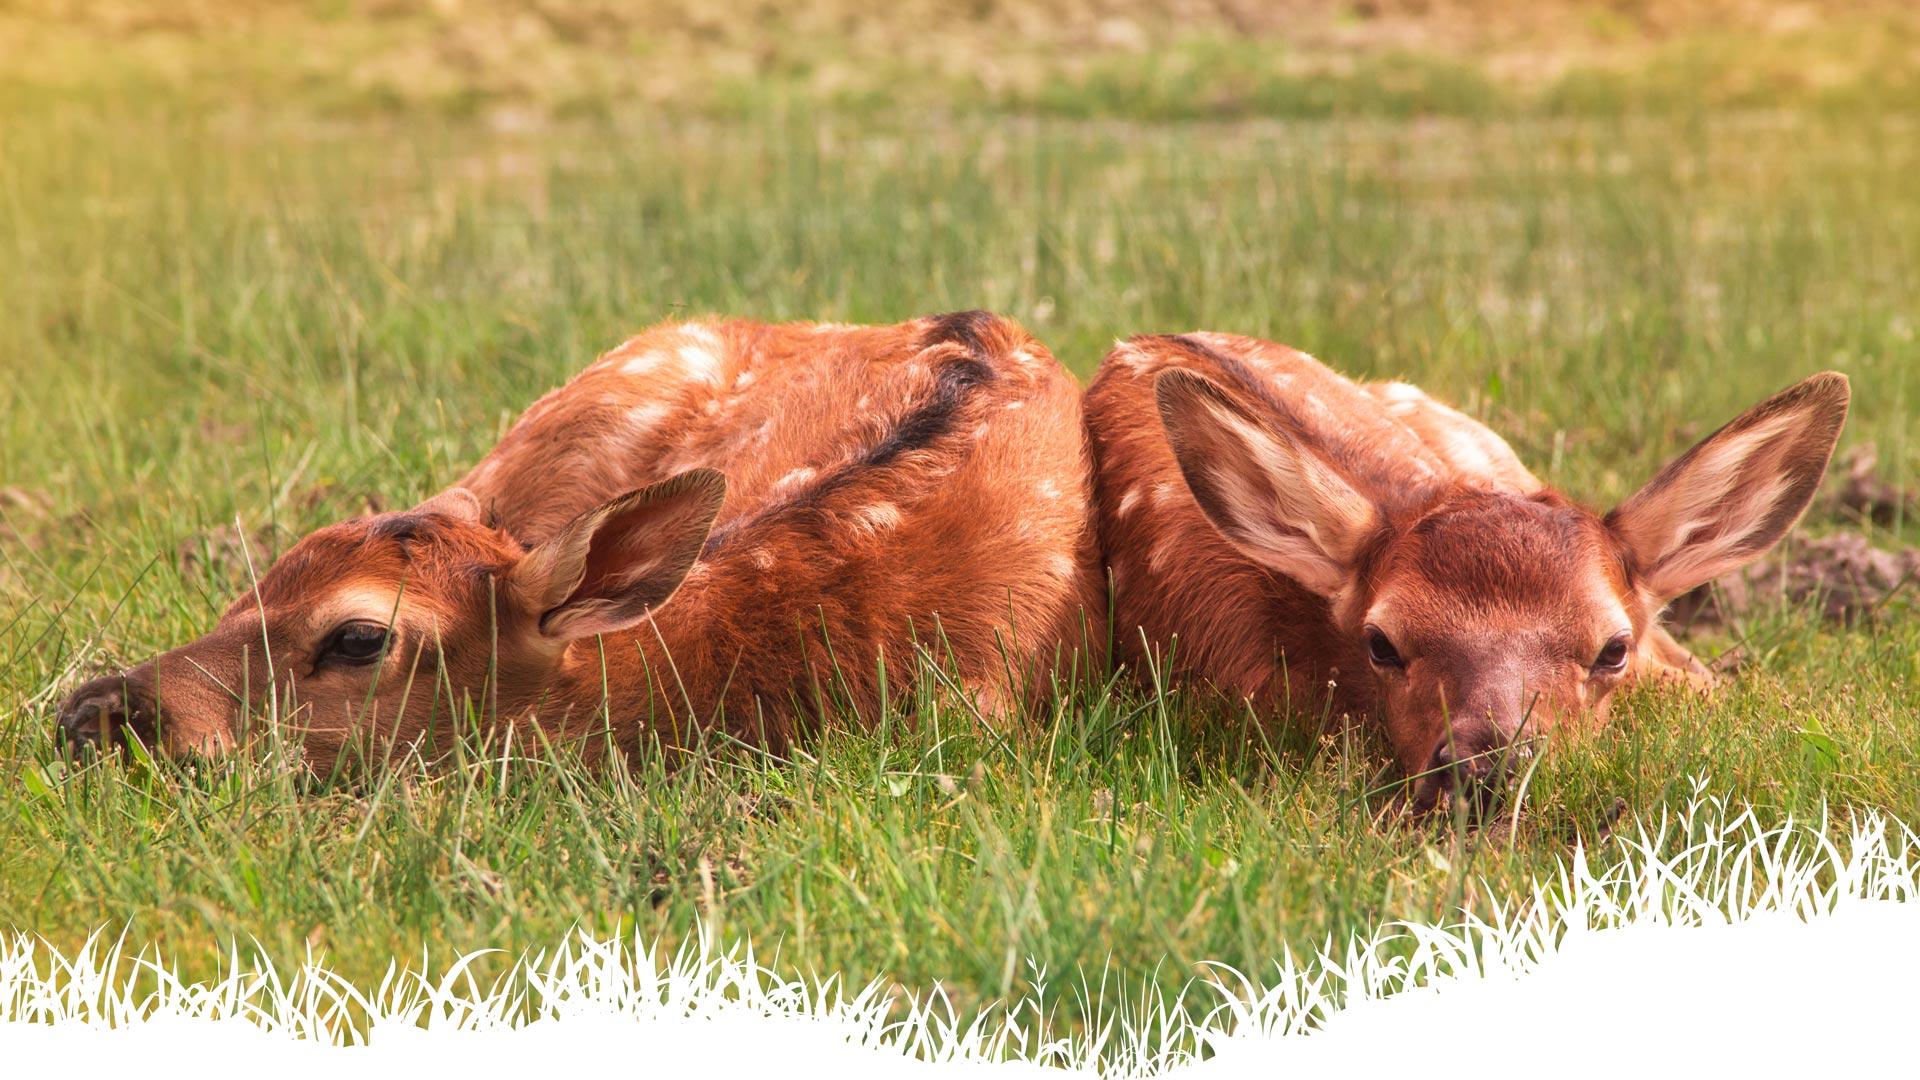 Elk calves